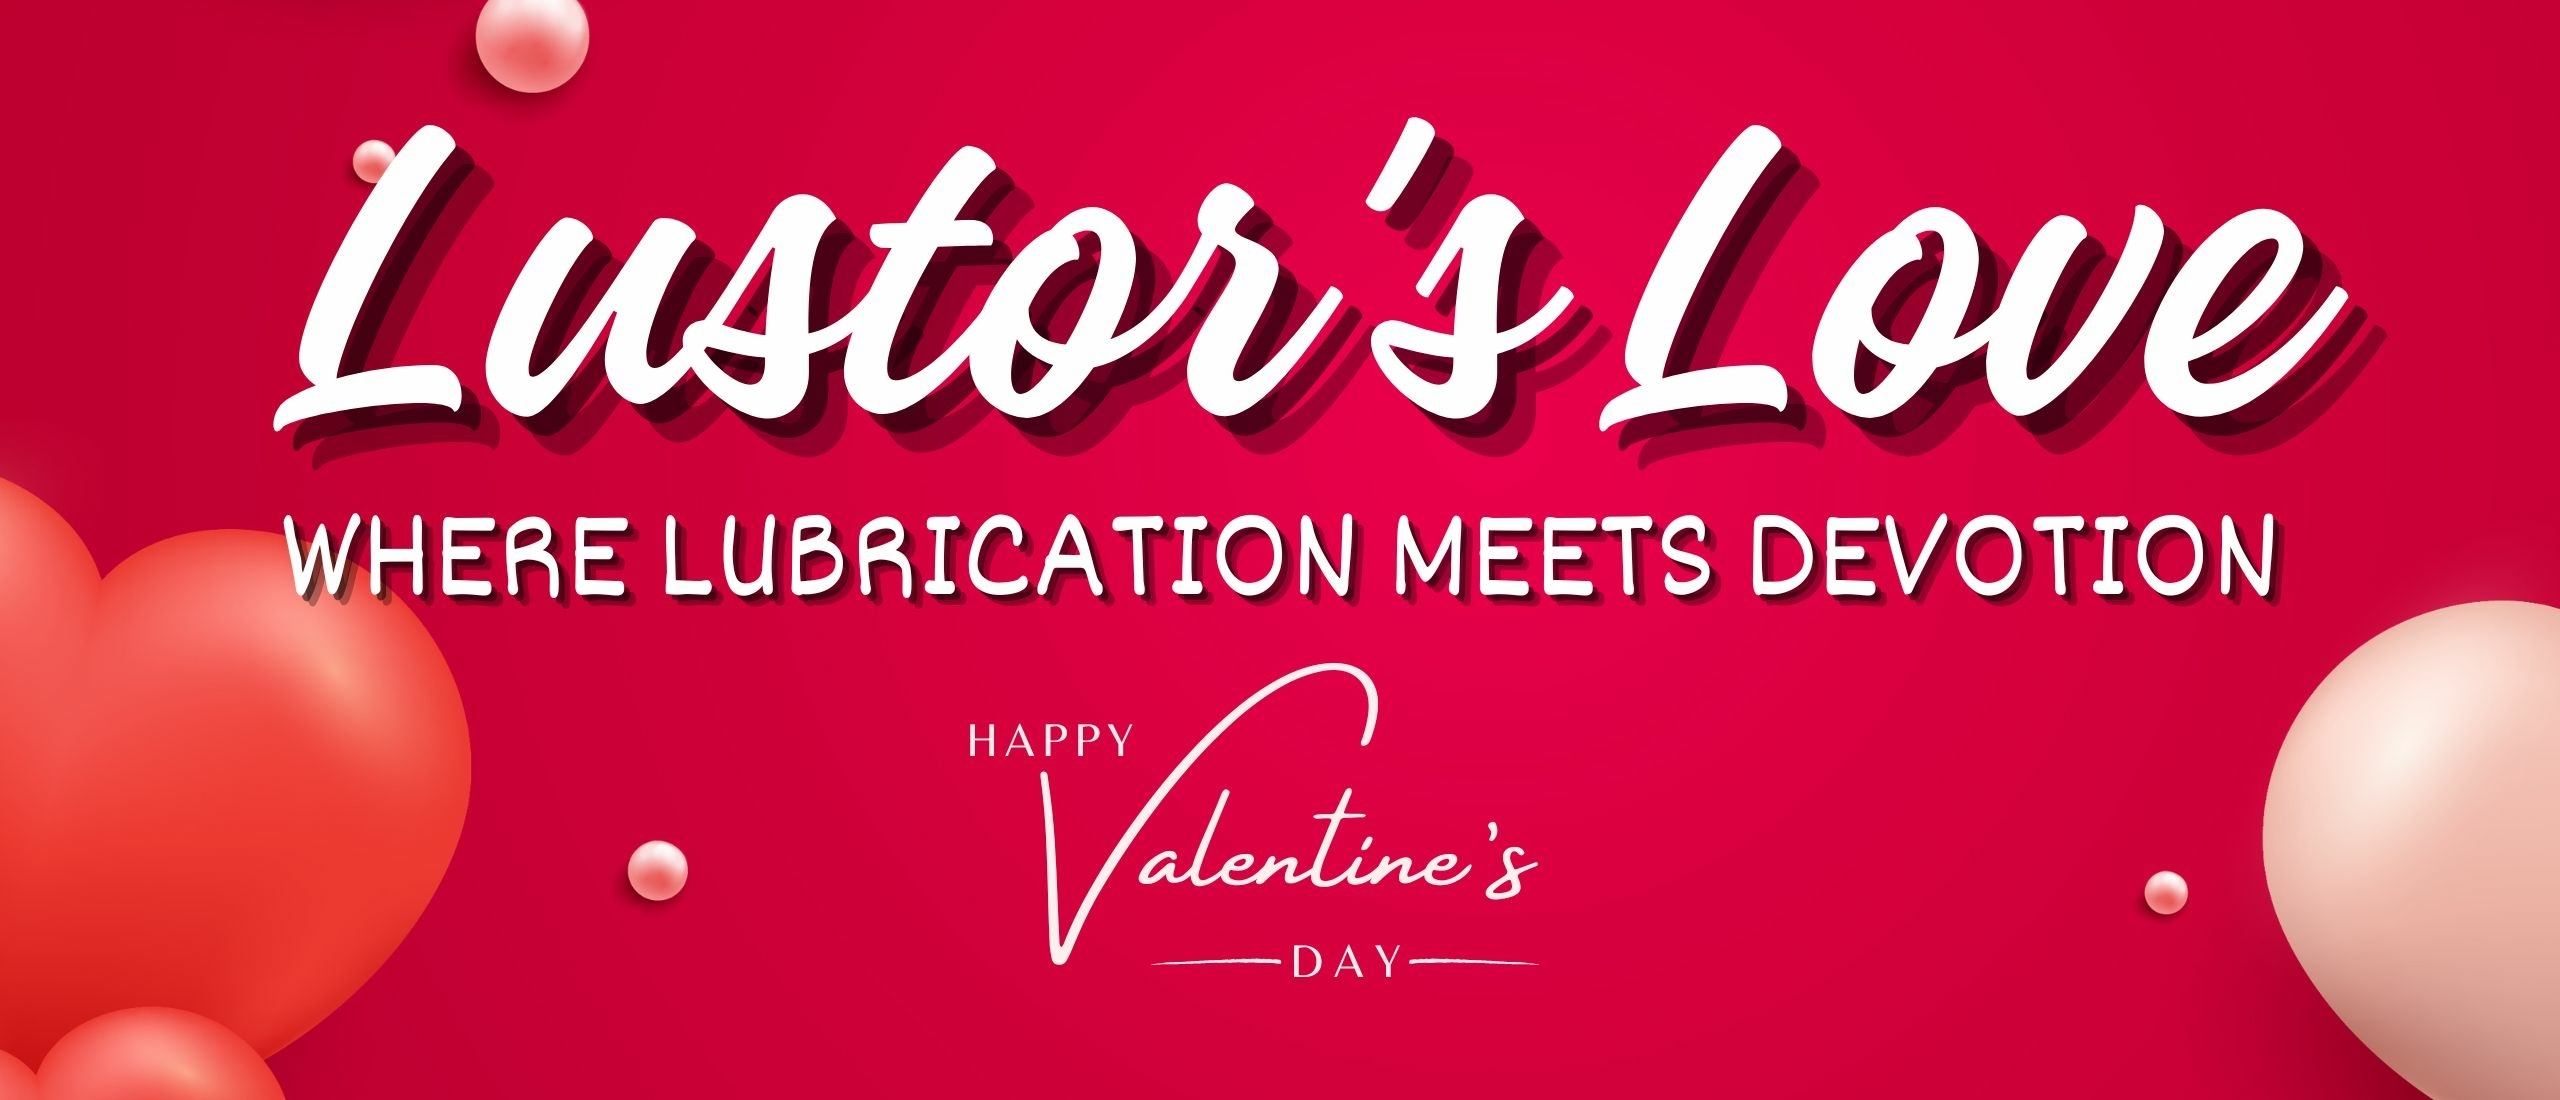 Lustor's Love - where Lubrication meets Devotion